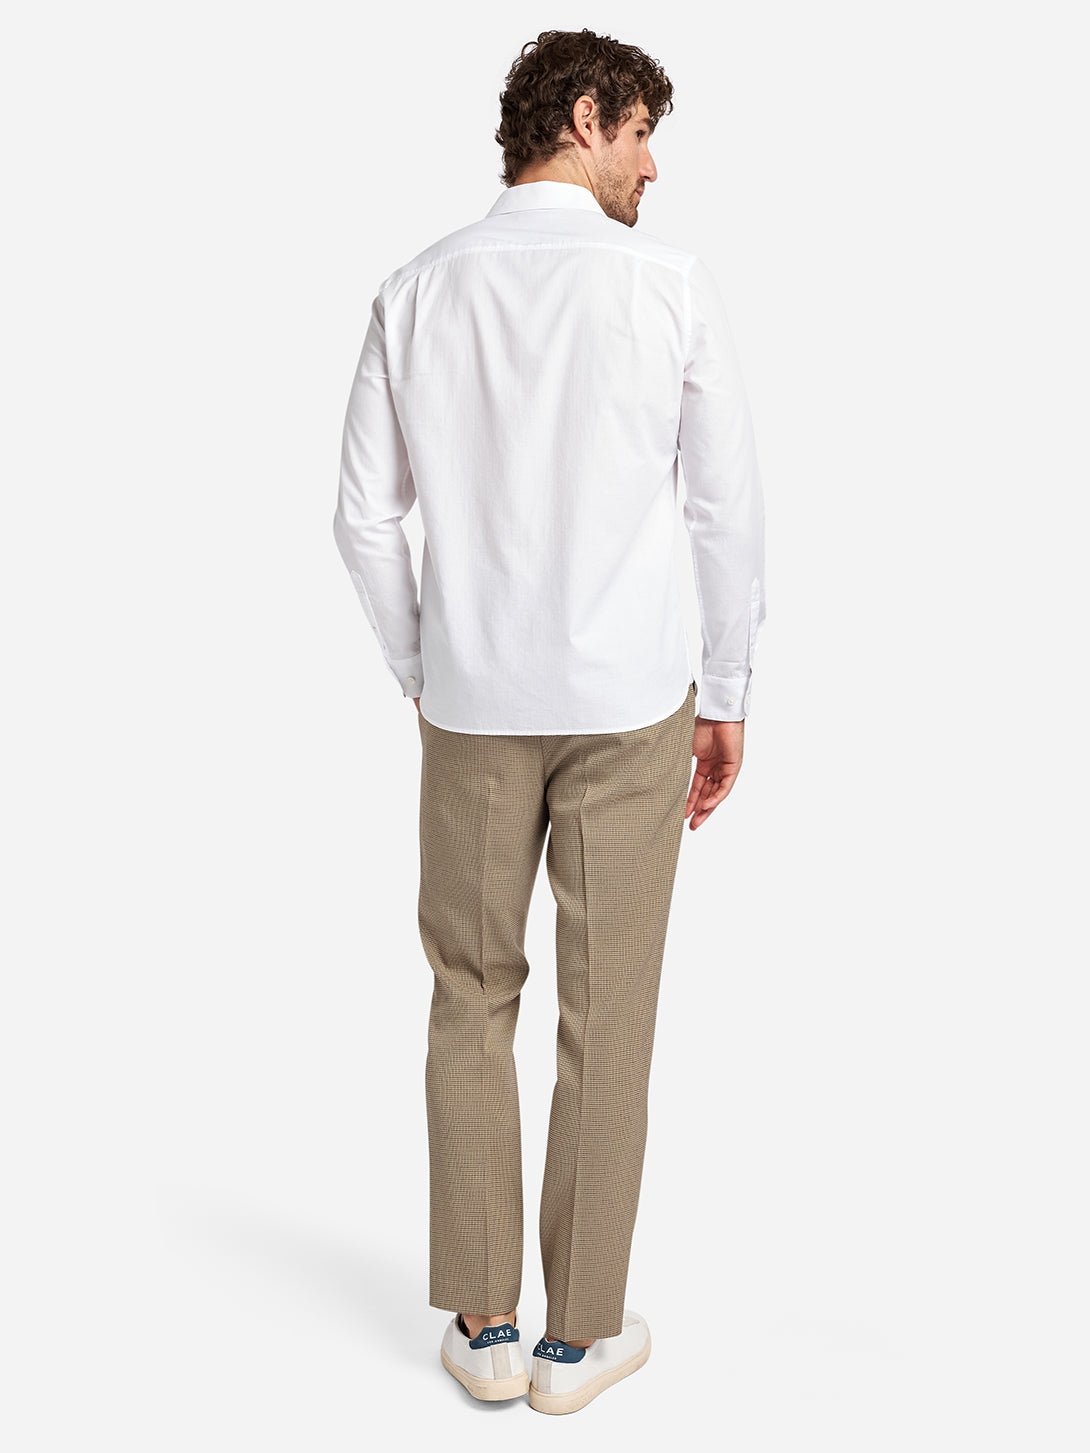 Bright White Arthur Herringbone Mens Button Up Shirt